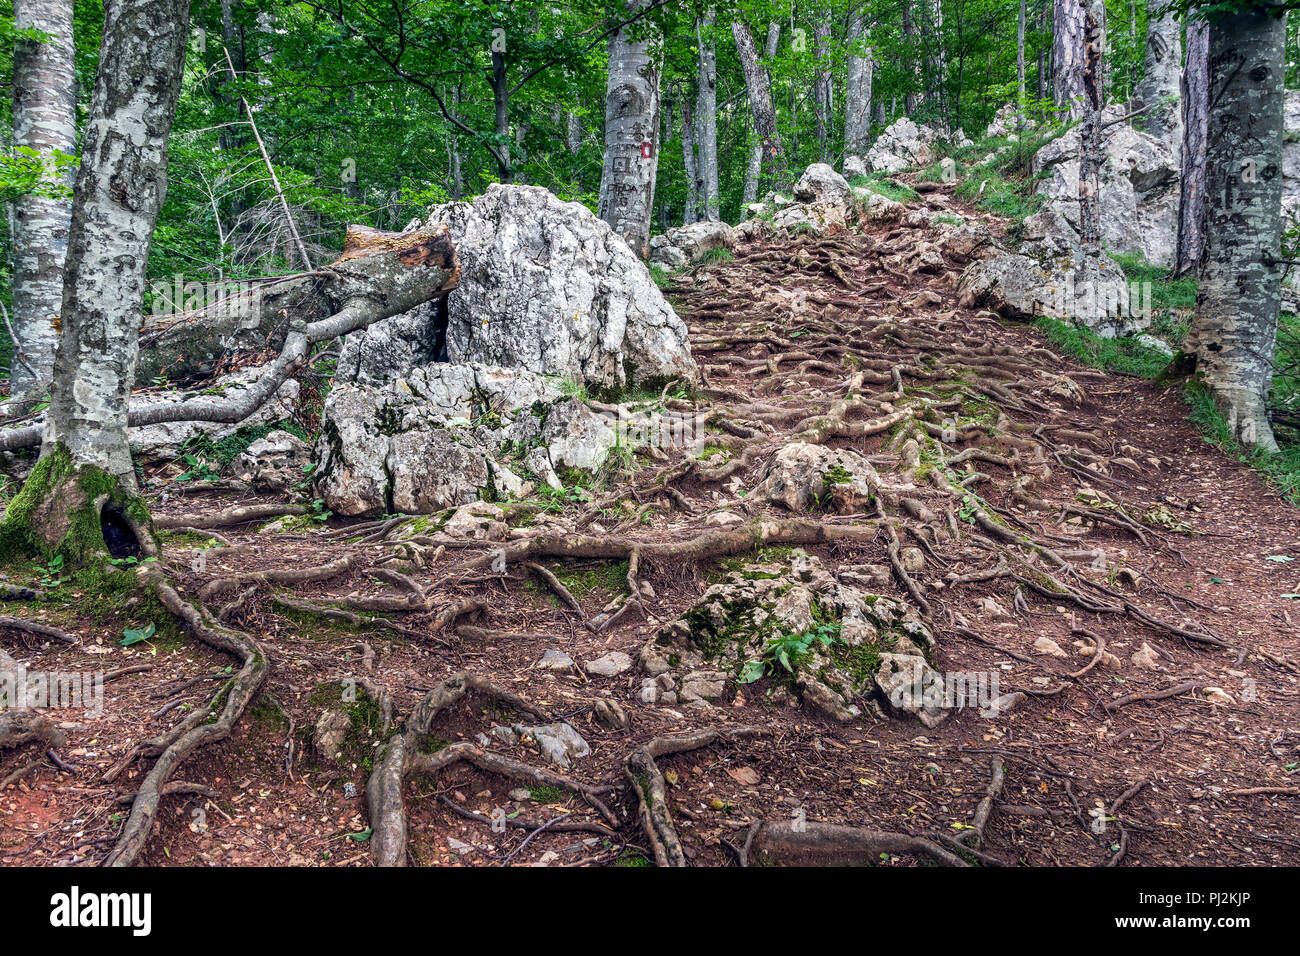 TARA National Park, West Serbia - Path through a dense forest Stock Photo